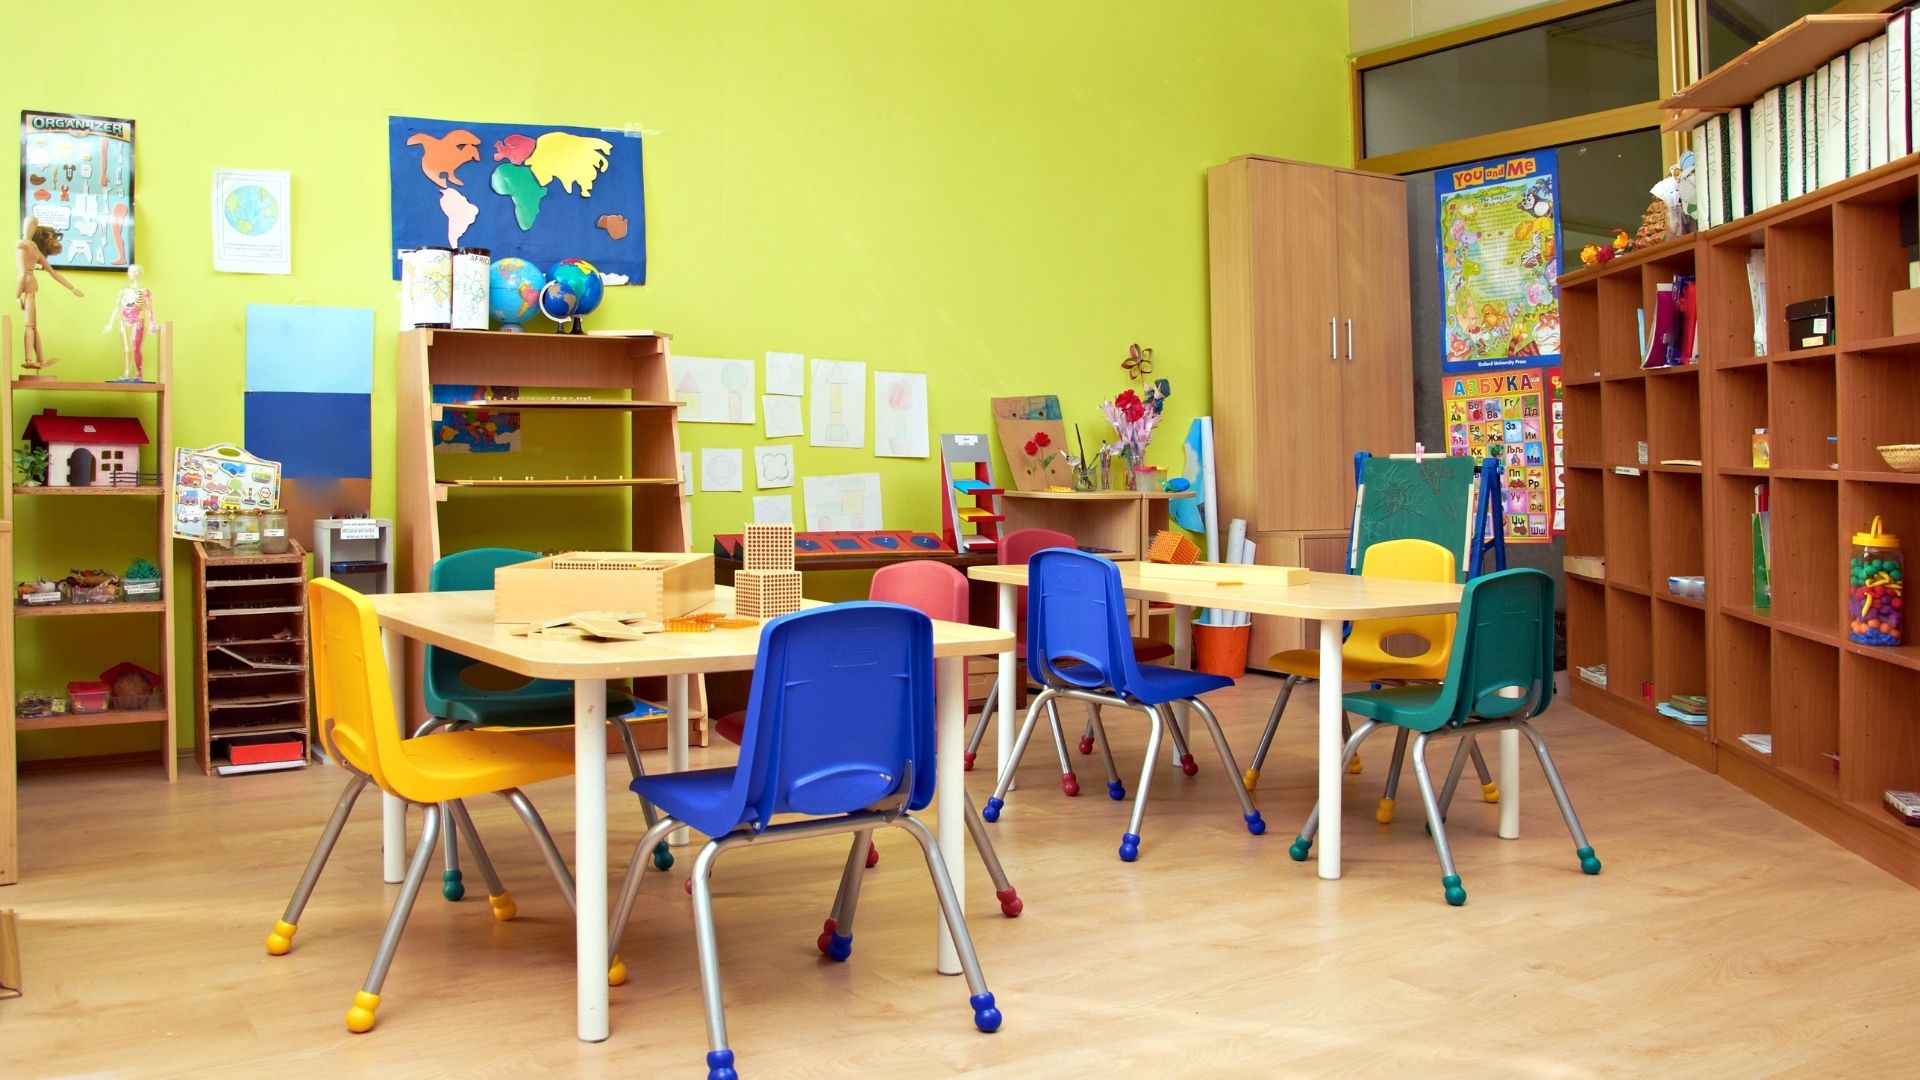 A colorful classroom